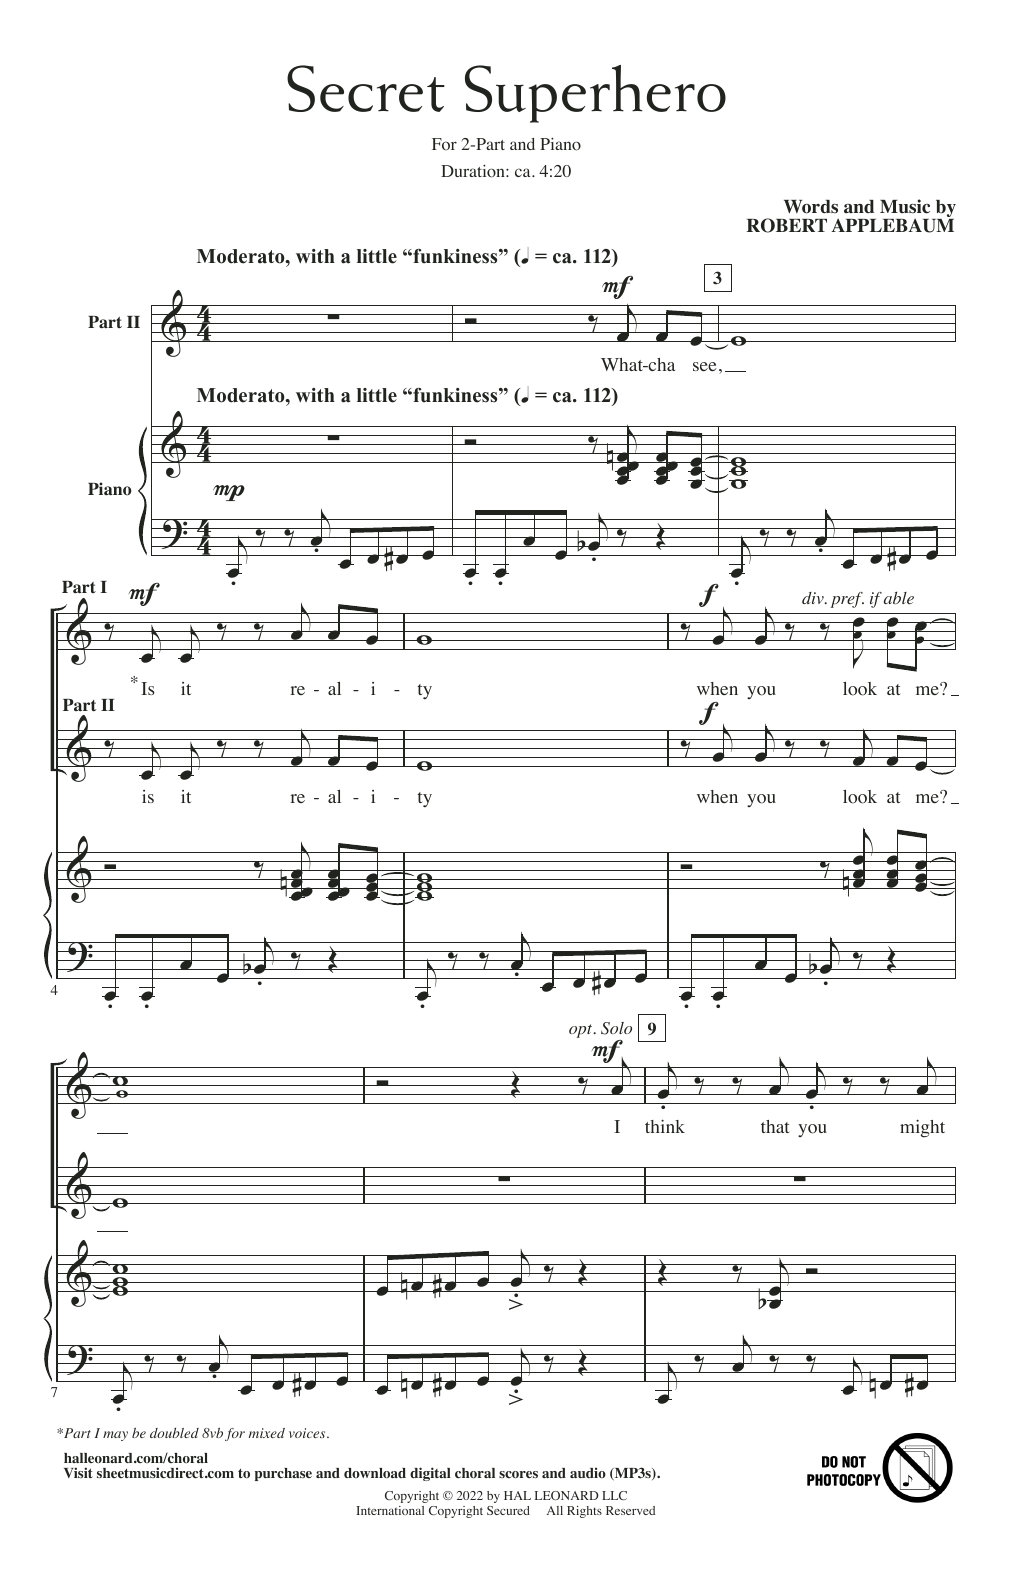 Robert Applebaum Secret Superhero Sheet Music Notes & Chords for 2-Part Choir - Download or Print PDF